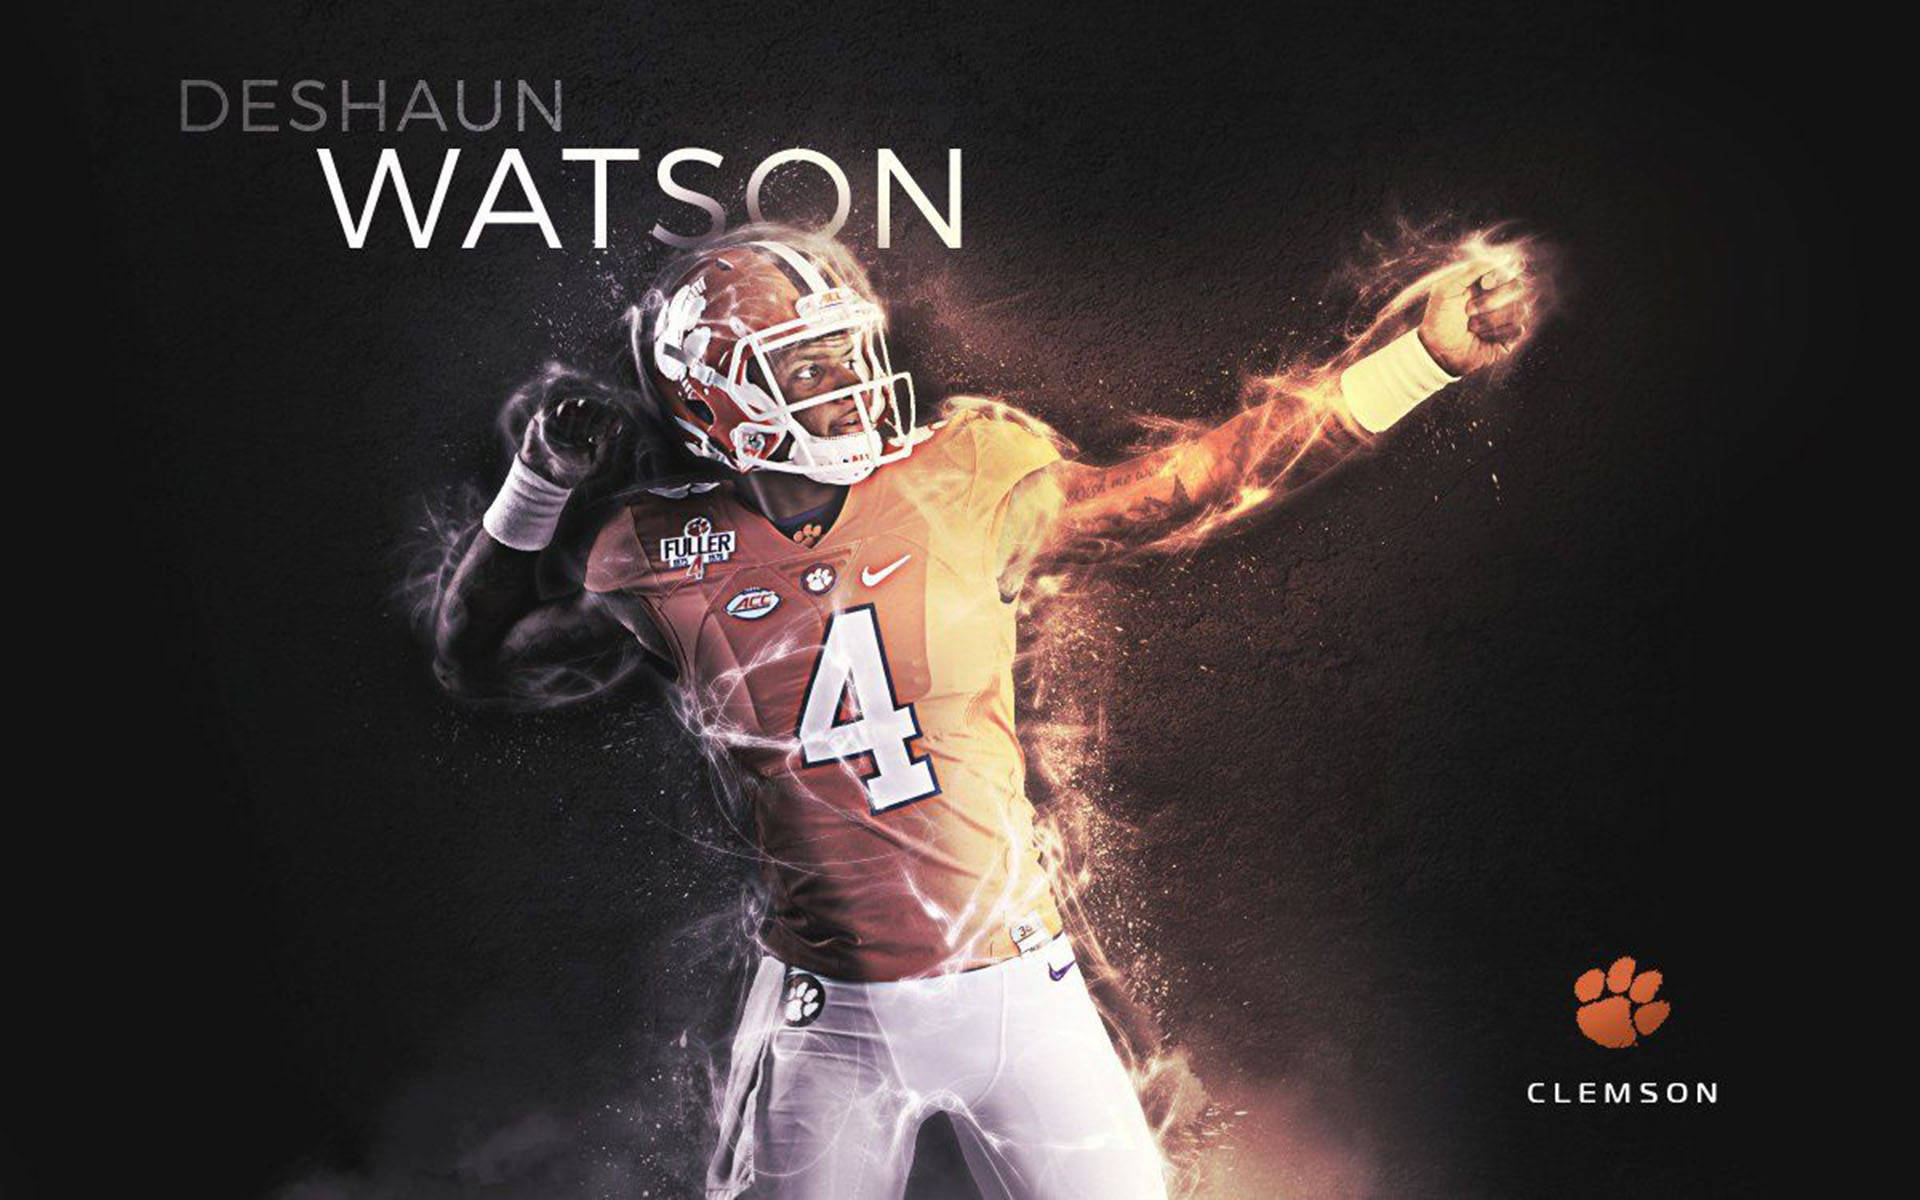 Deshaunwatson Flares Art: Deshaun Watson Flammar Konst Wallpaper